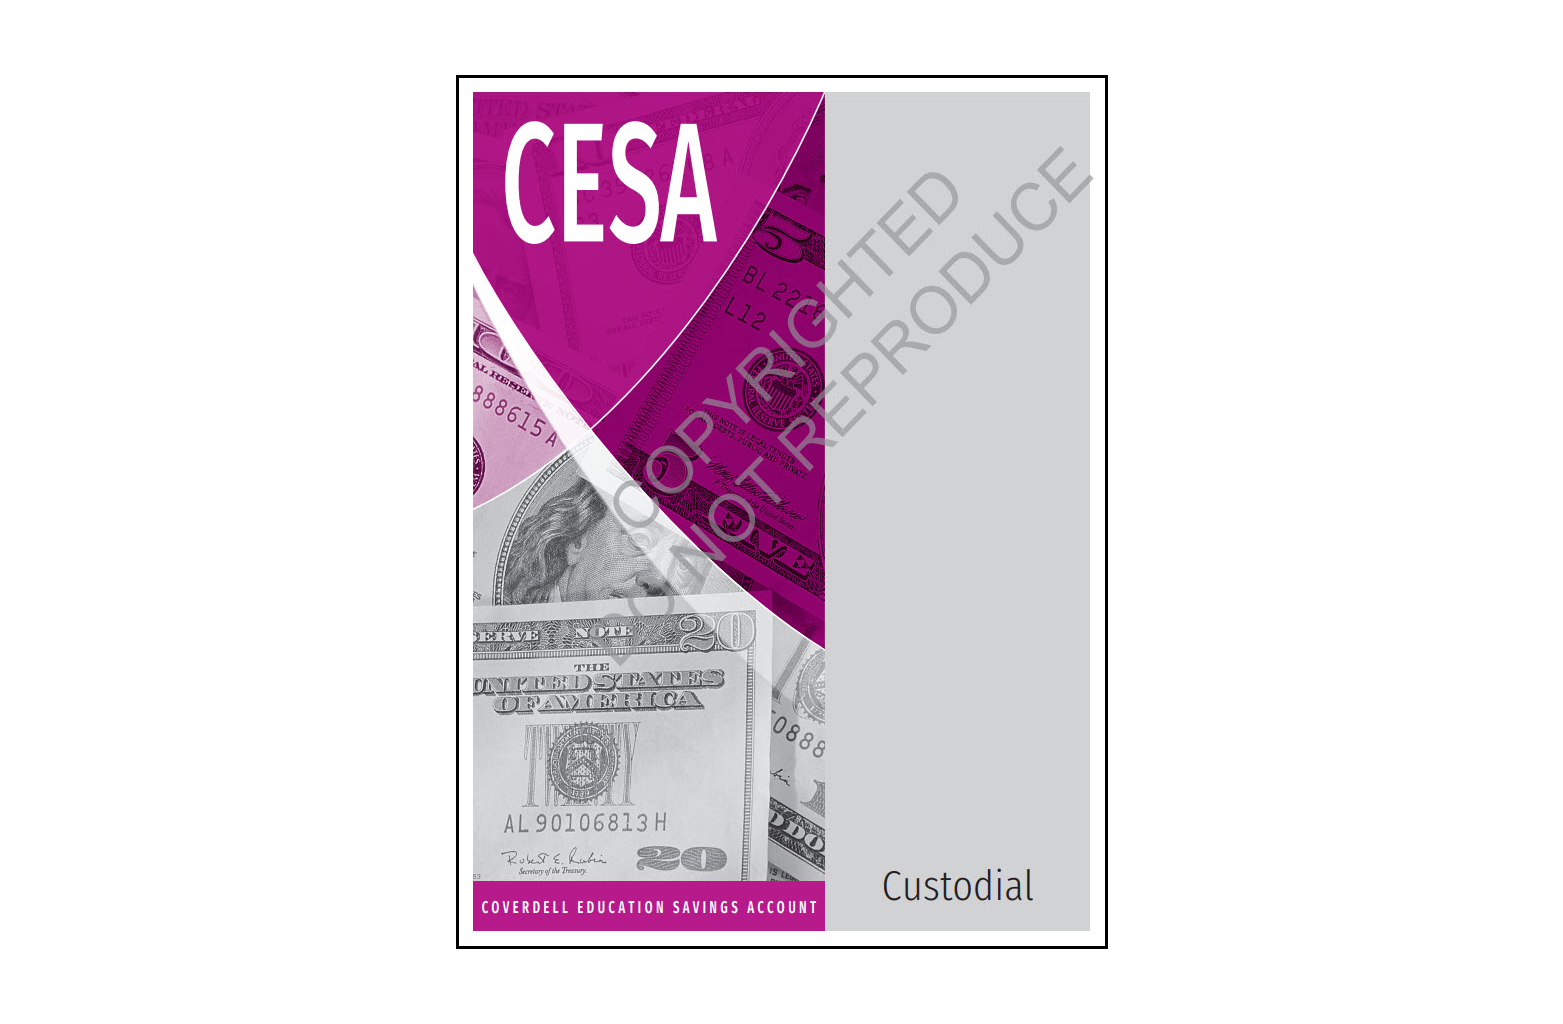 CESA organiser - custodial sample